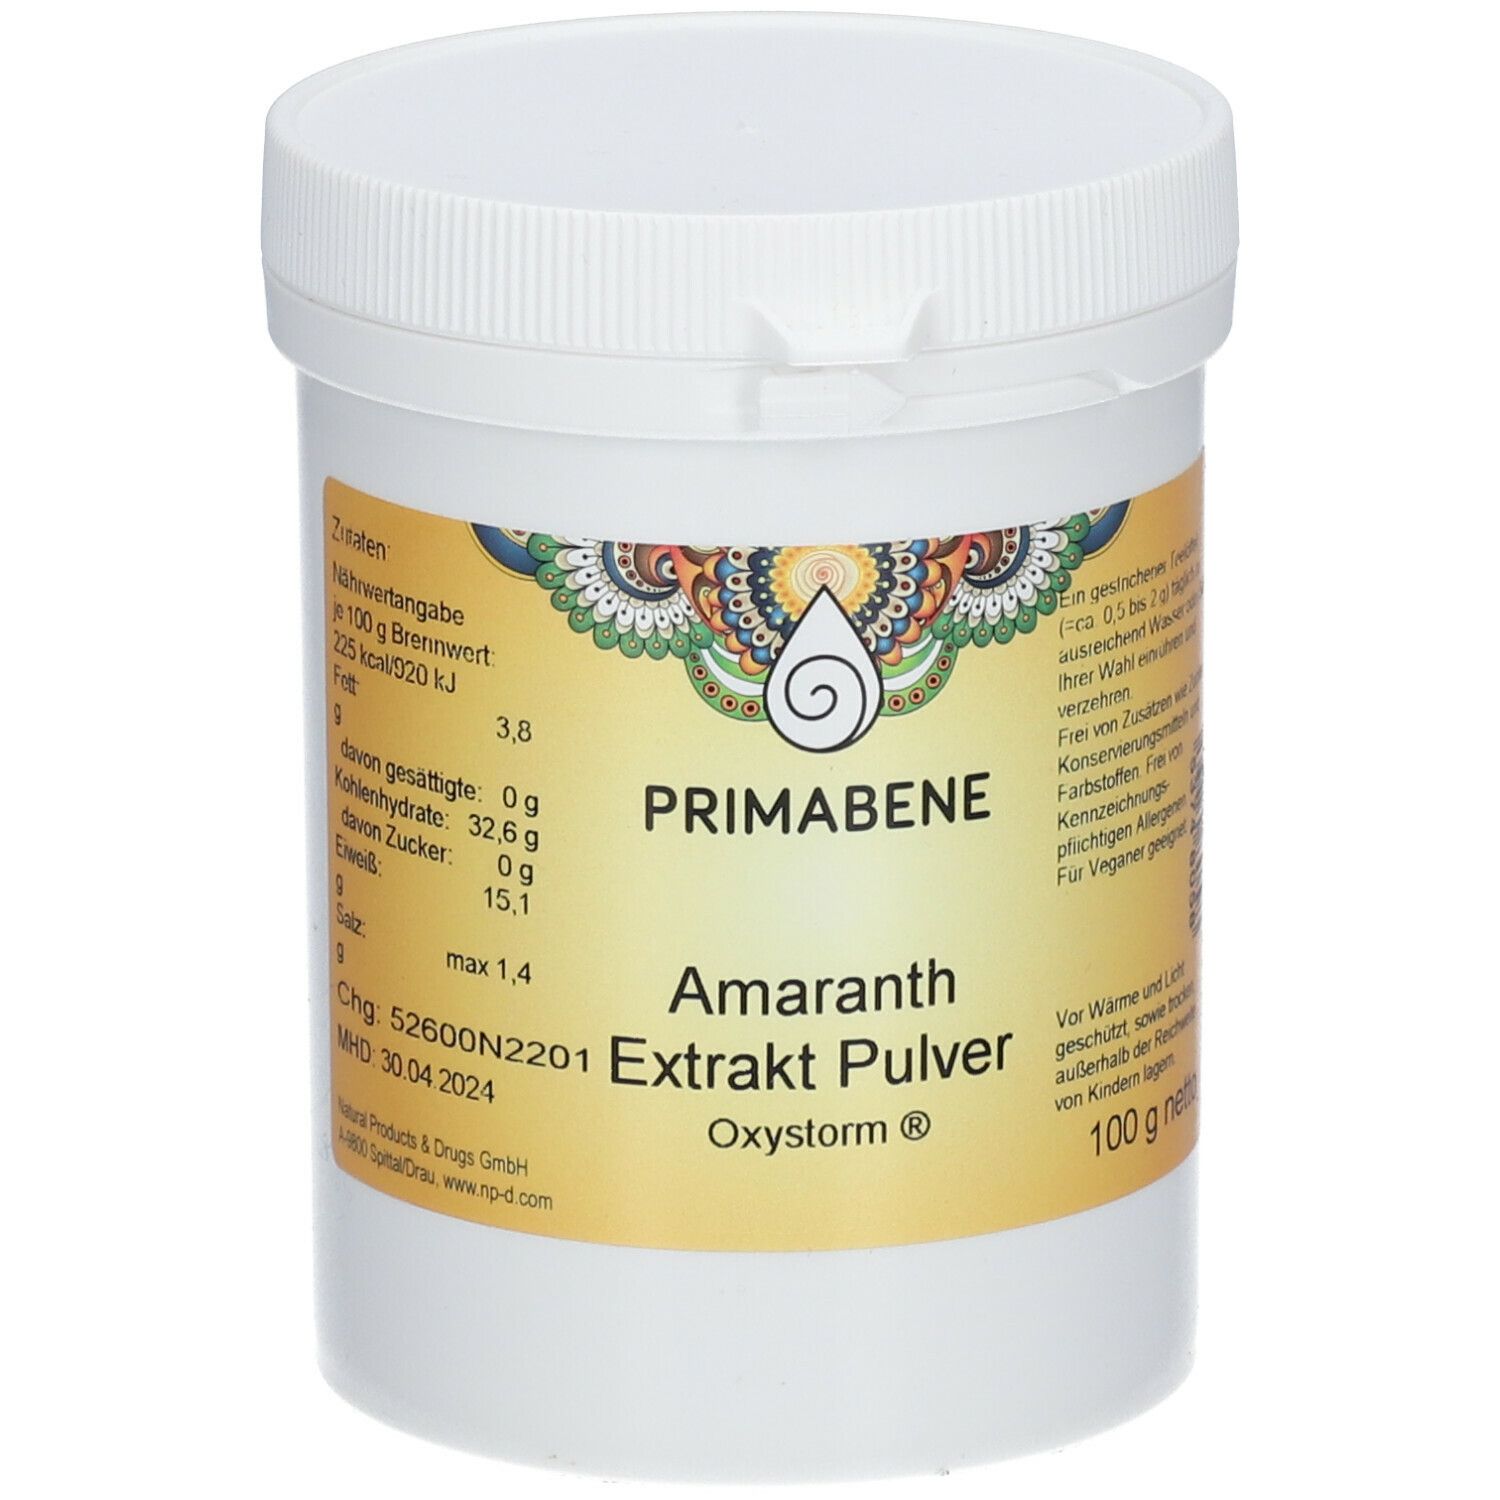 PRIMABENE Amaranth Extrakt Pulver (Oxystorm®) 100 g - Shop Apotheke